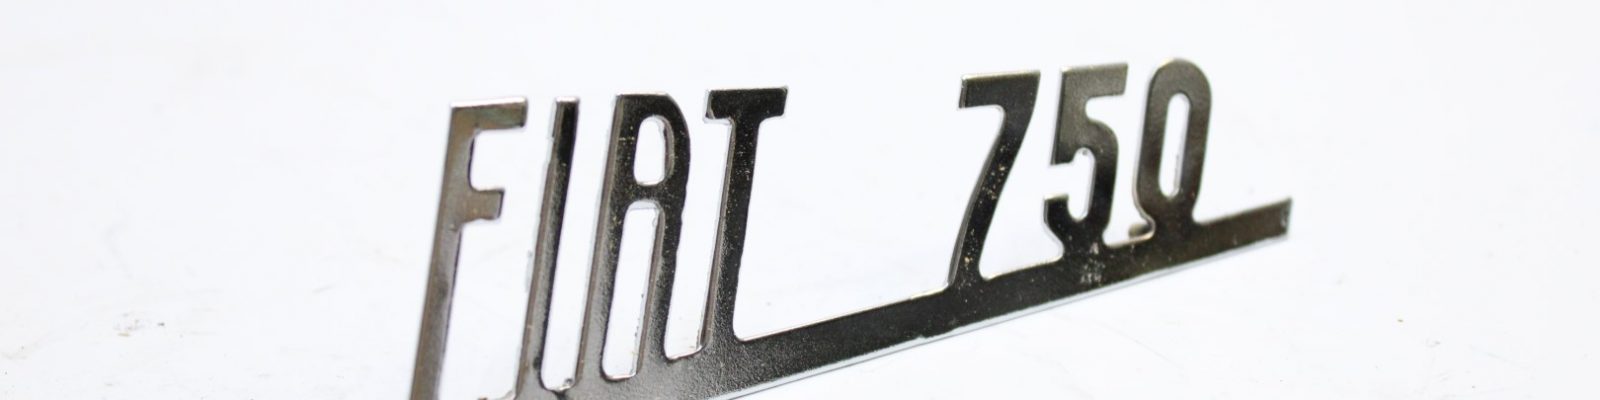 Fiat 750 rear emblem